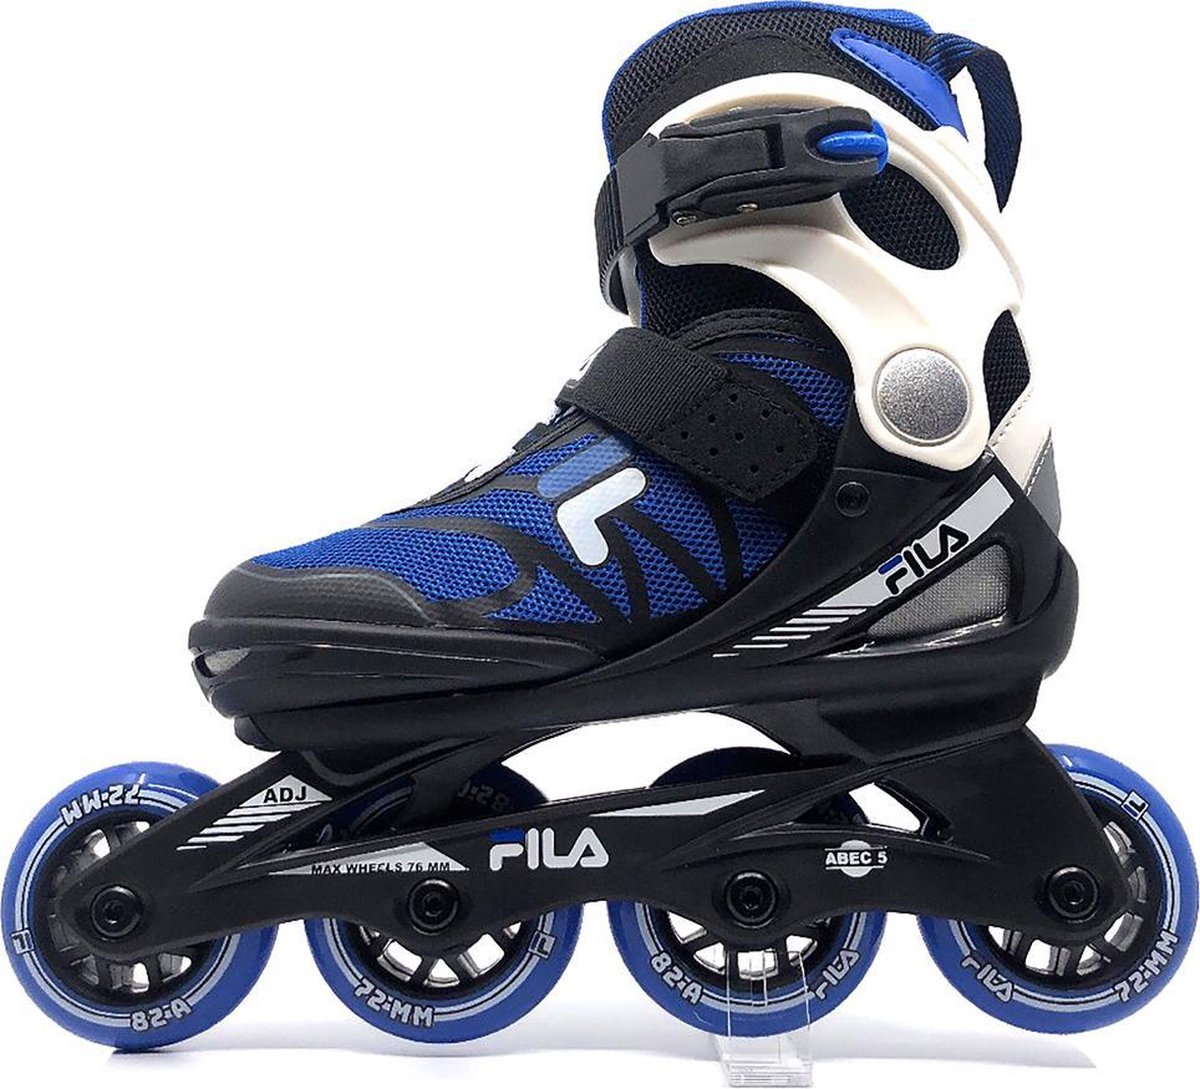 Fila - Verstelbare inline skates - J one - Maat 28-32 - Blauw - Zwart